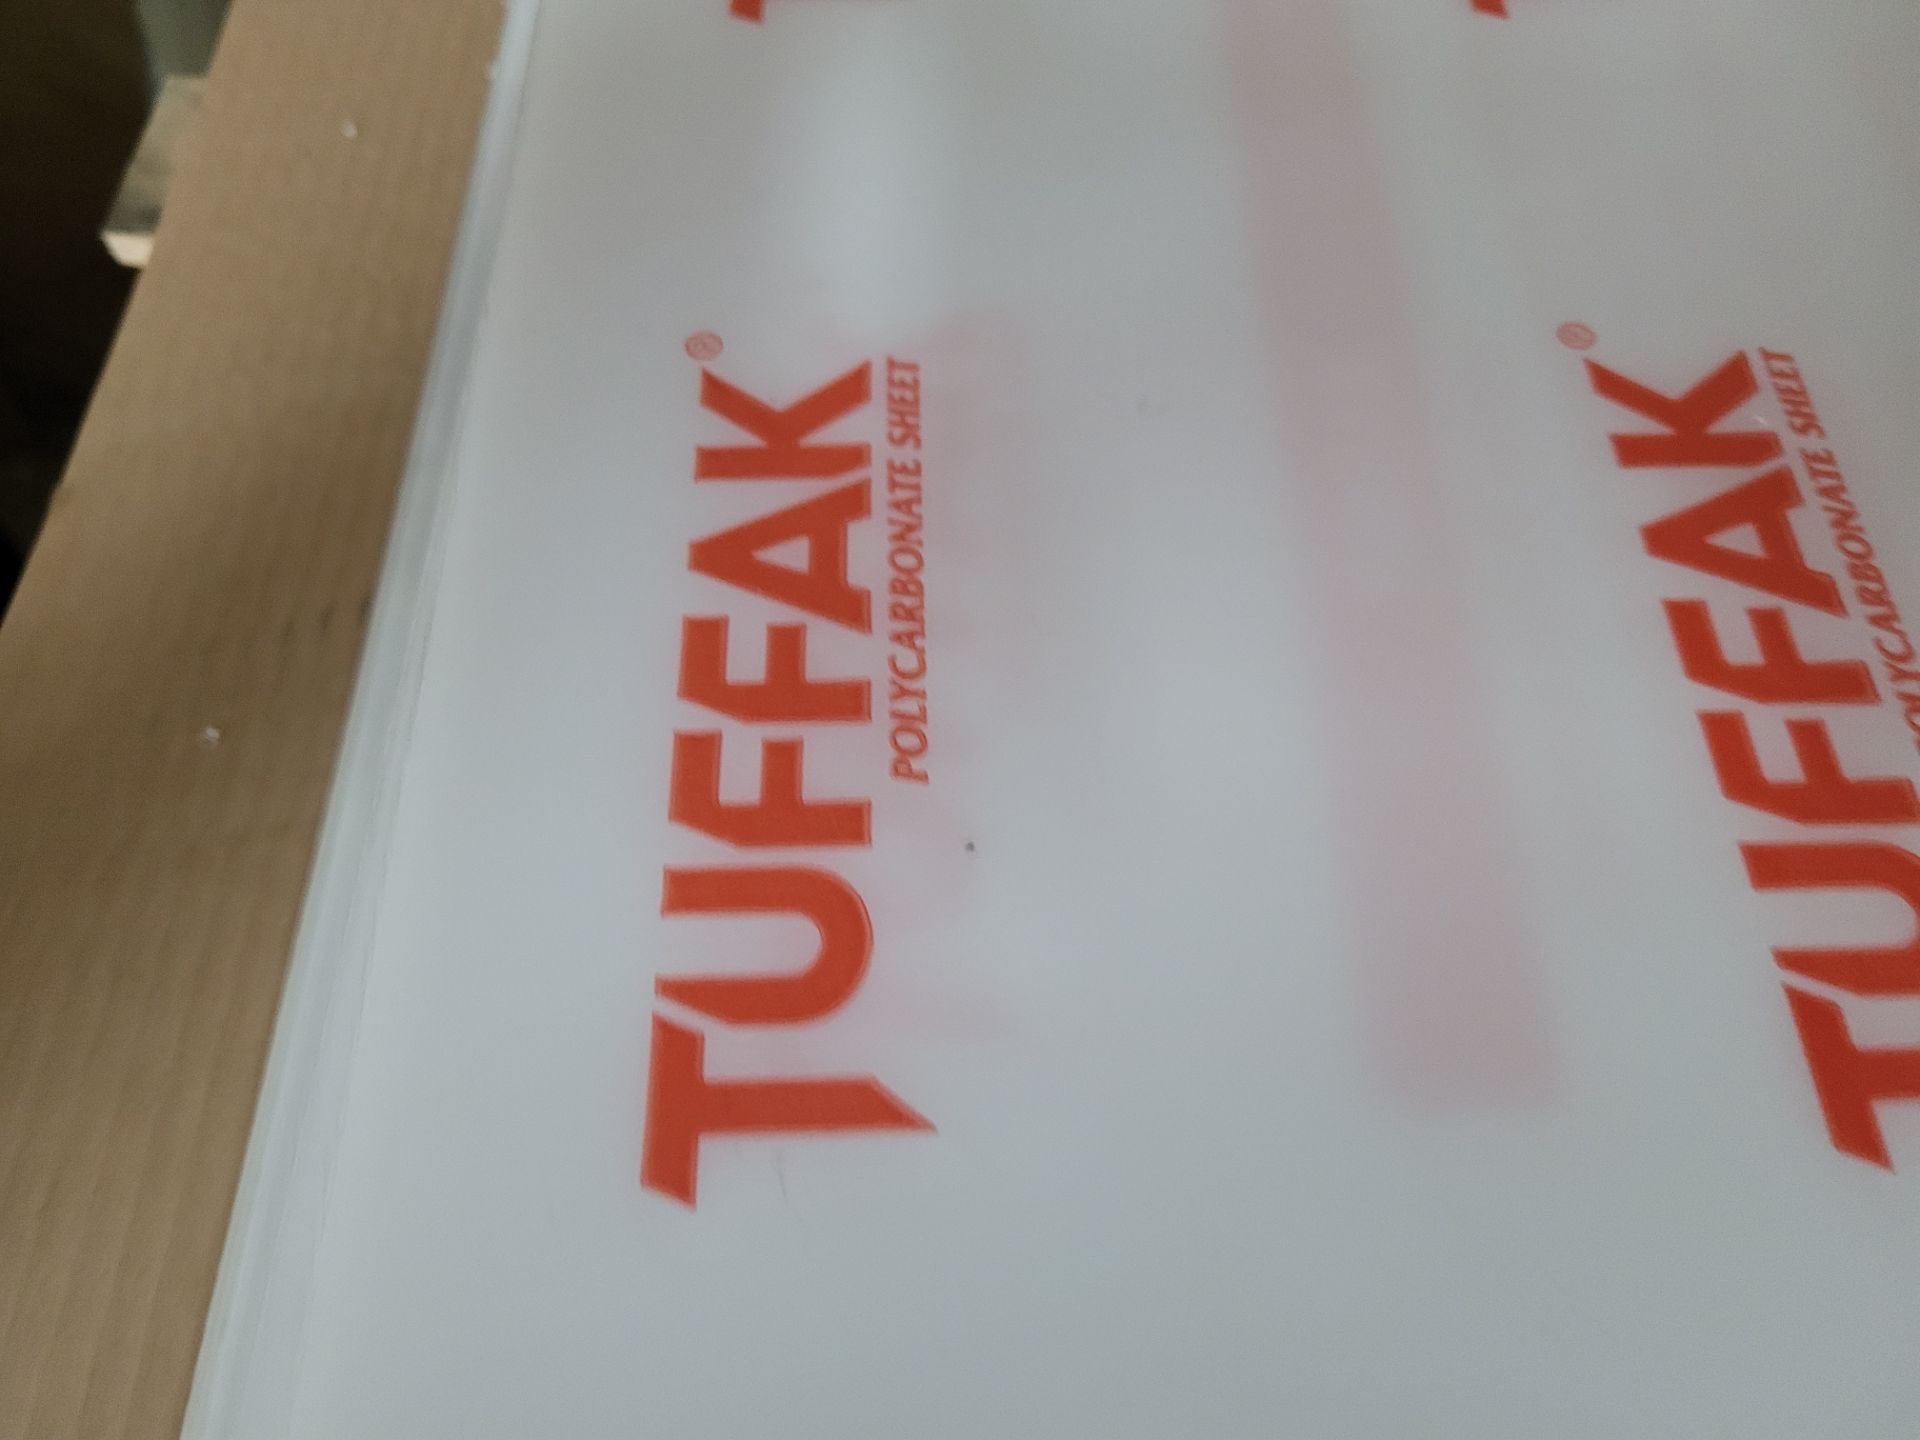 Lot of TUFAK Polycarbonate sheets, various sizes - Image 4 of 4